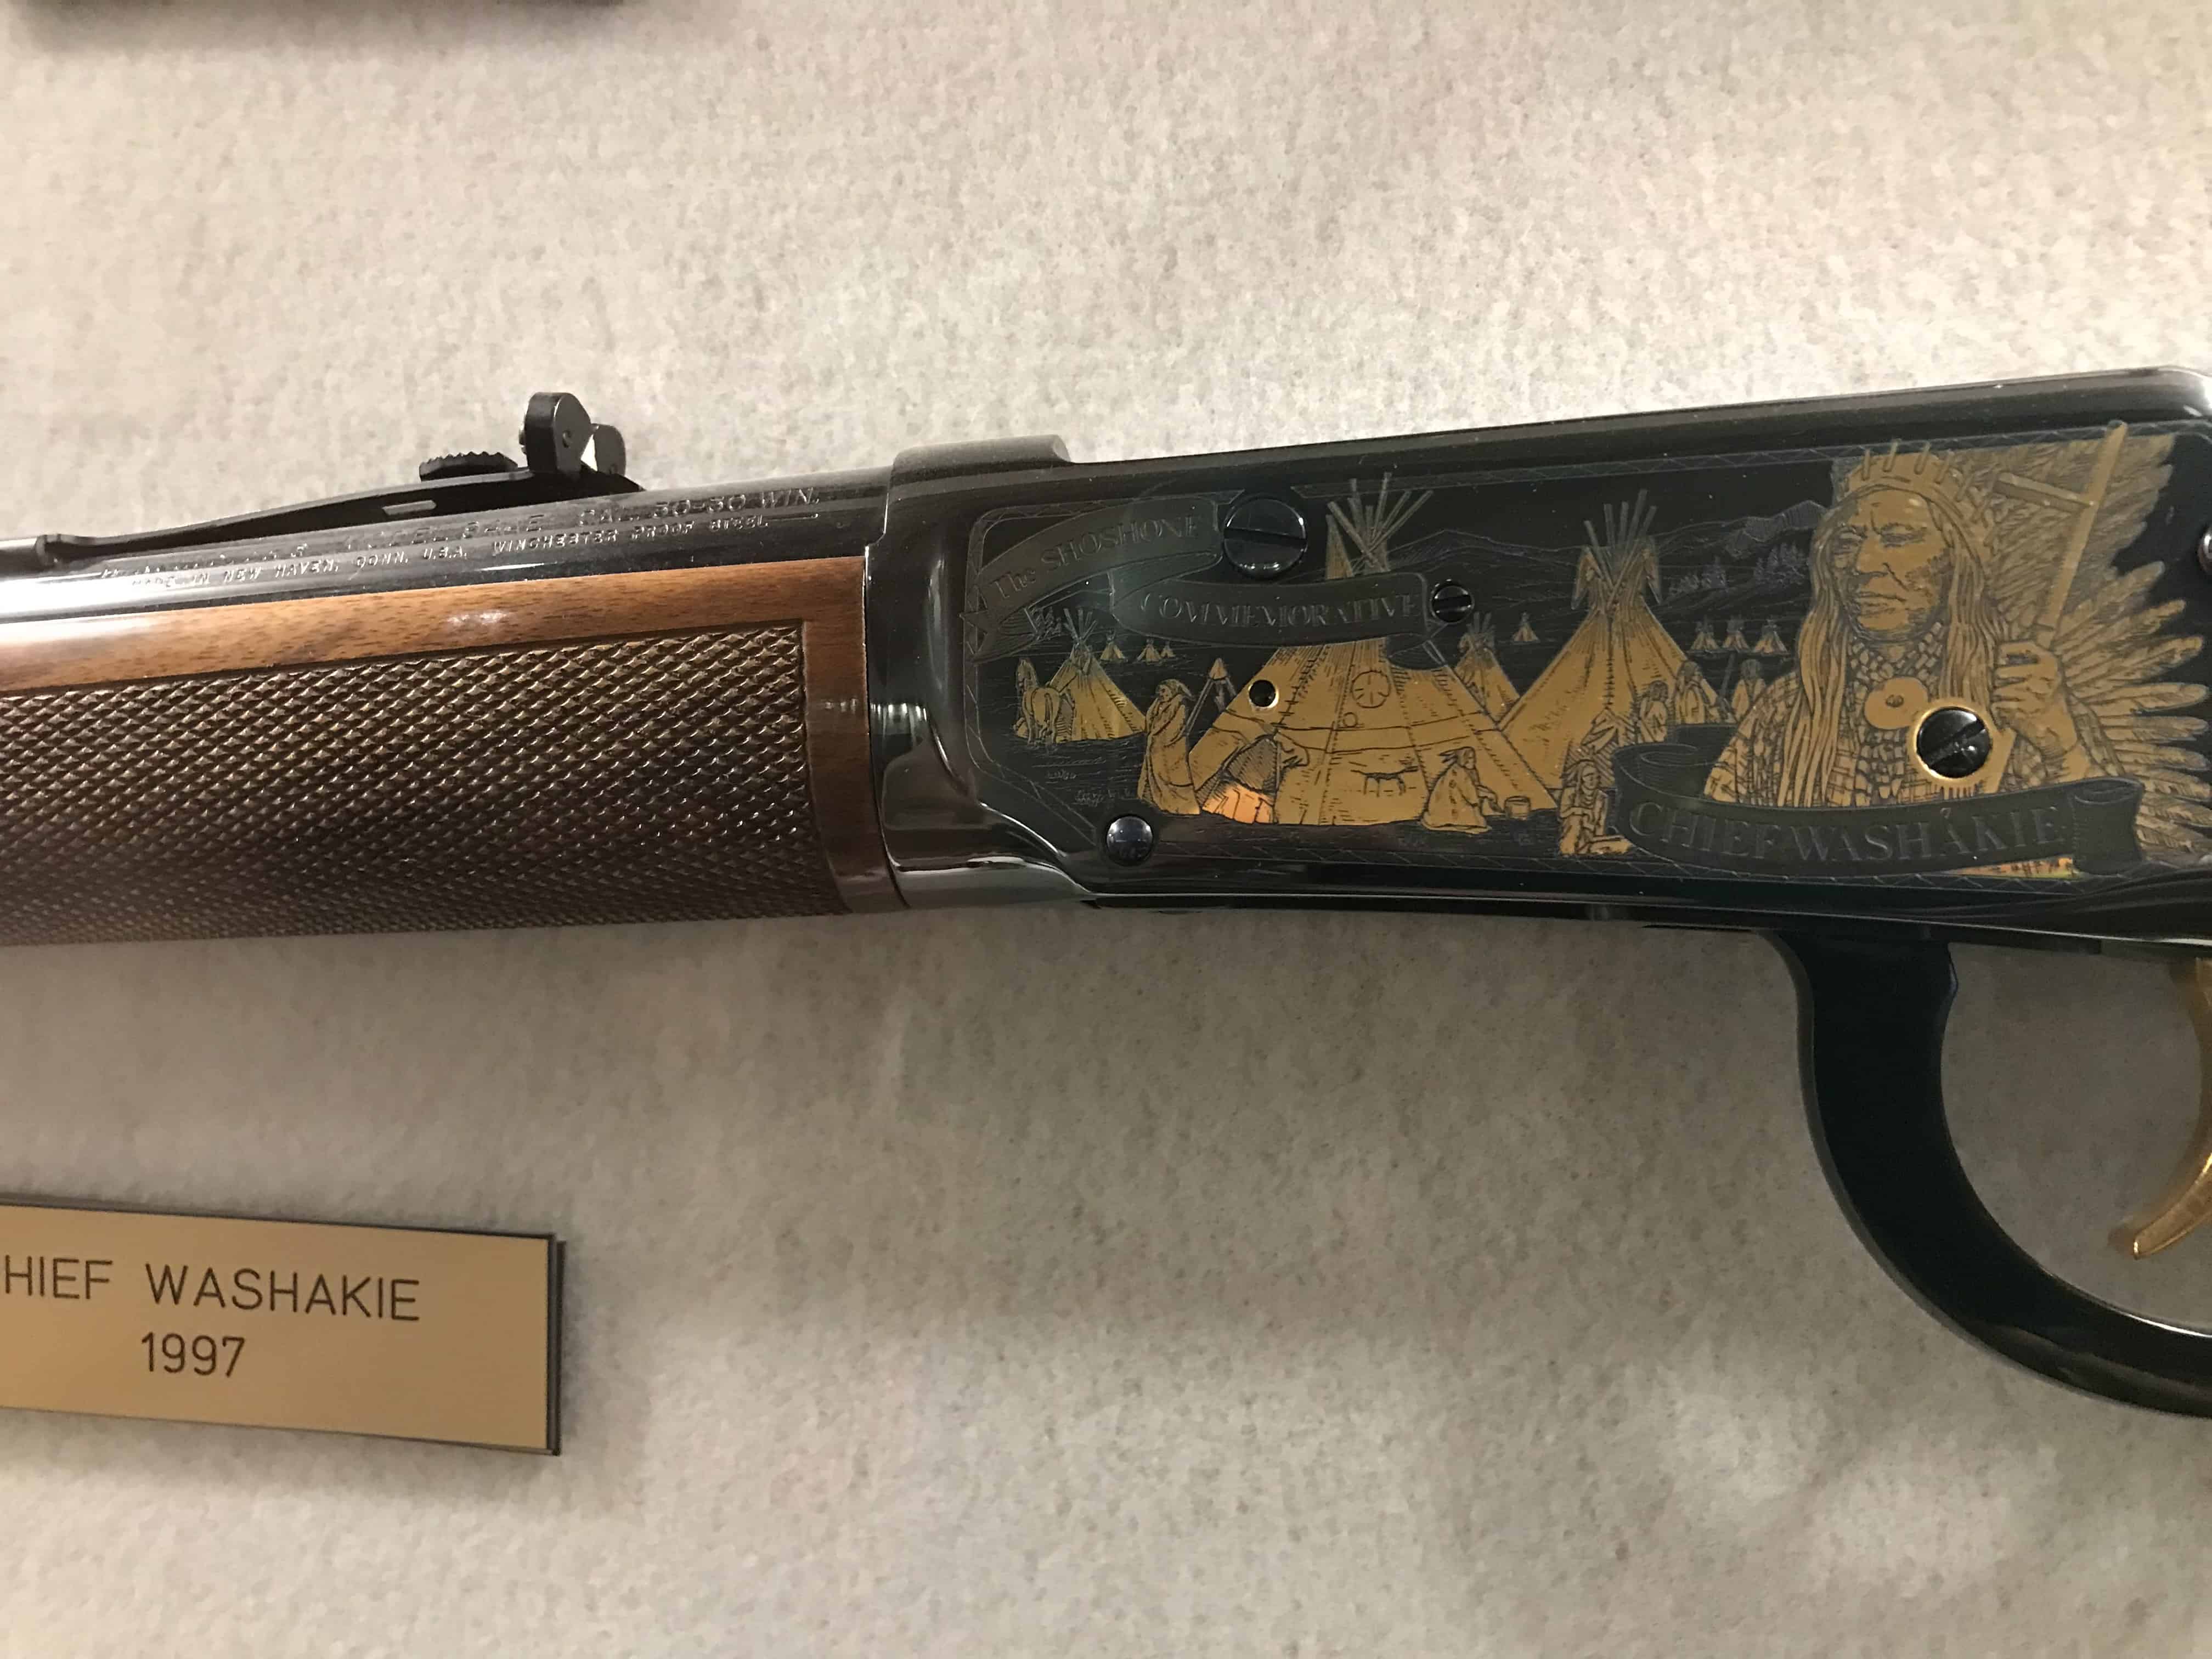 Decorative scene on rifle handle